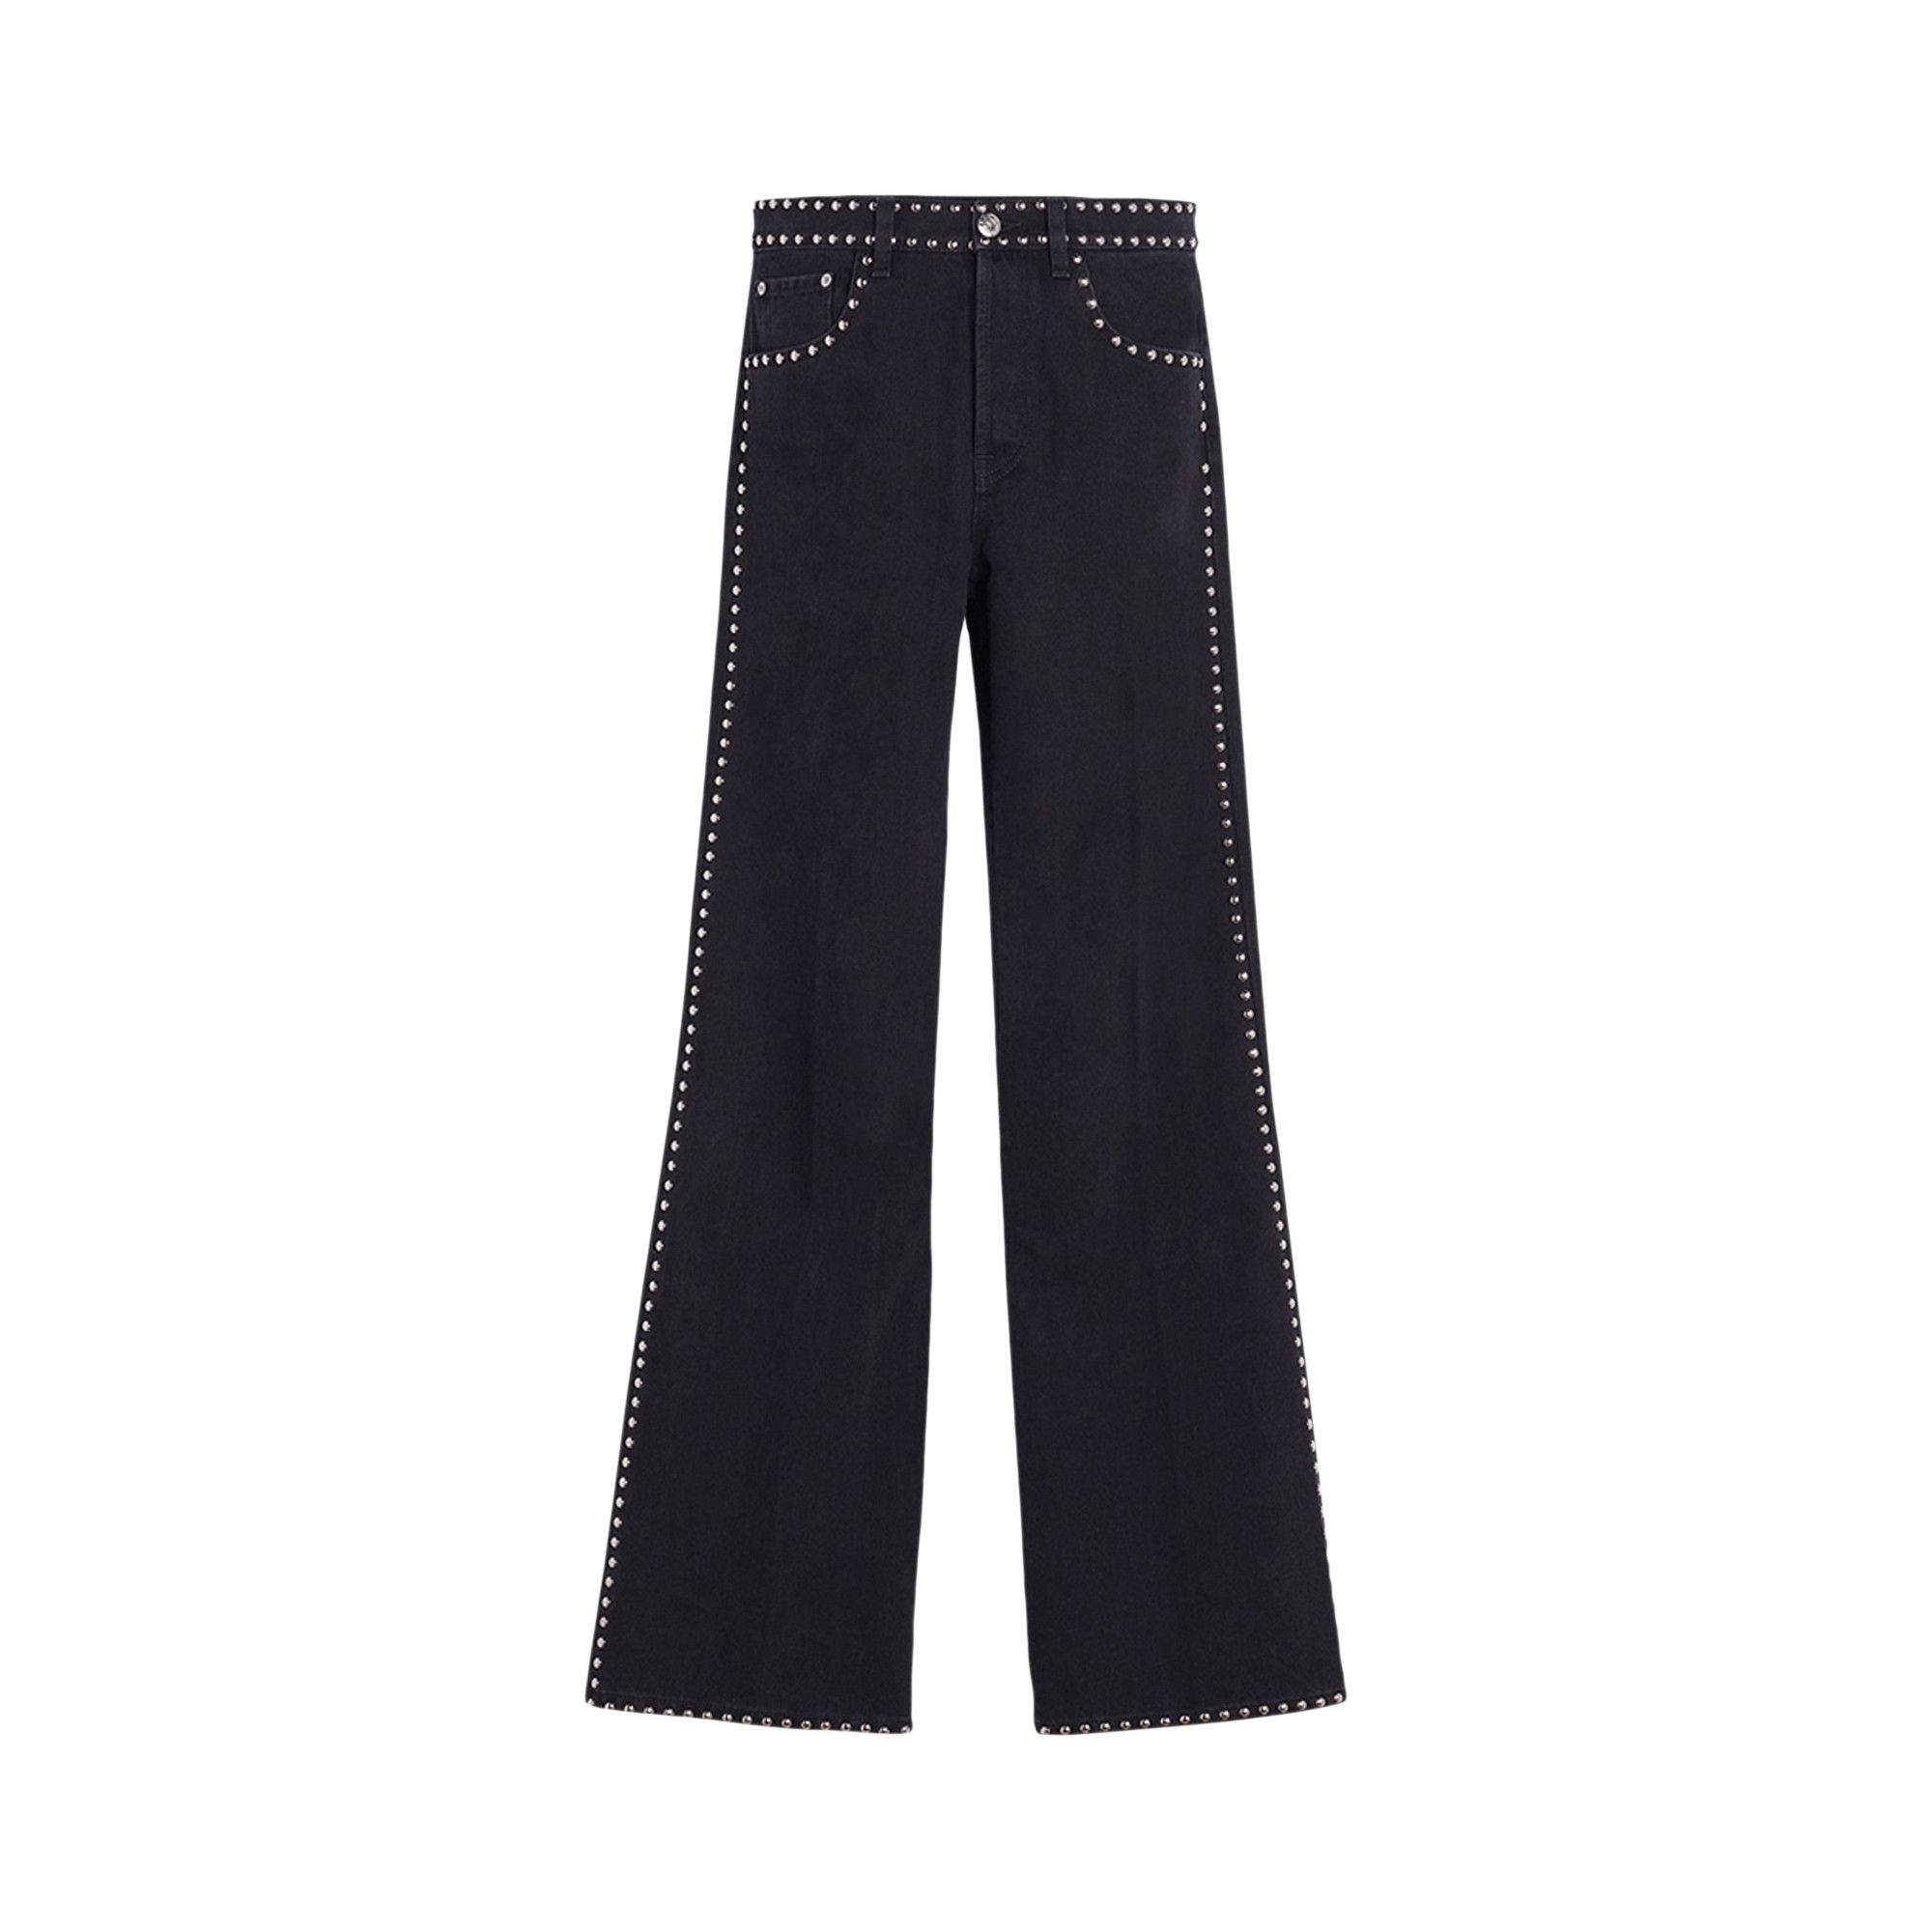 Lanvin Embroidered Flared Pants 'Black' - 1